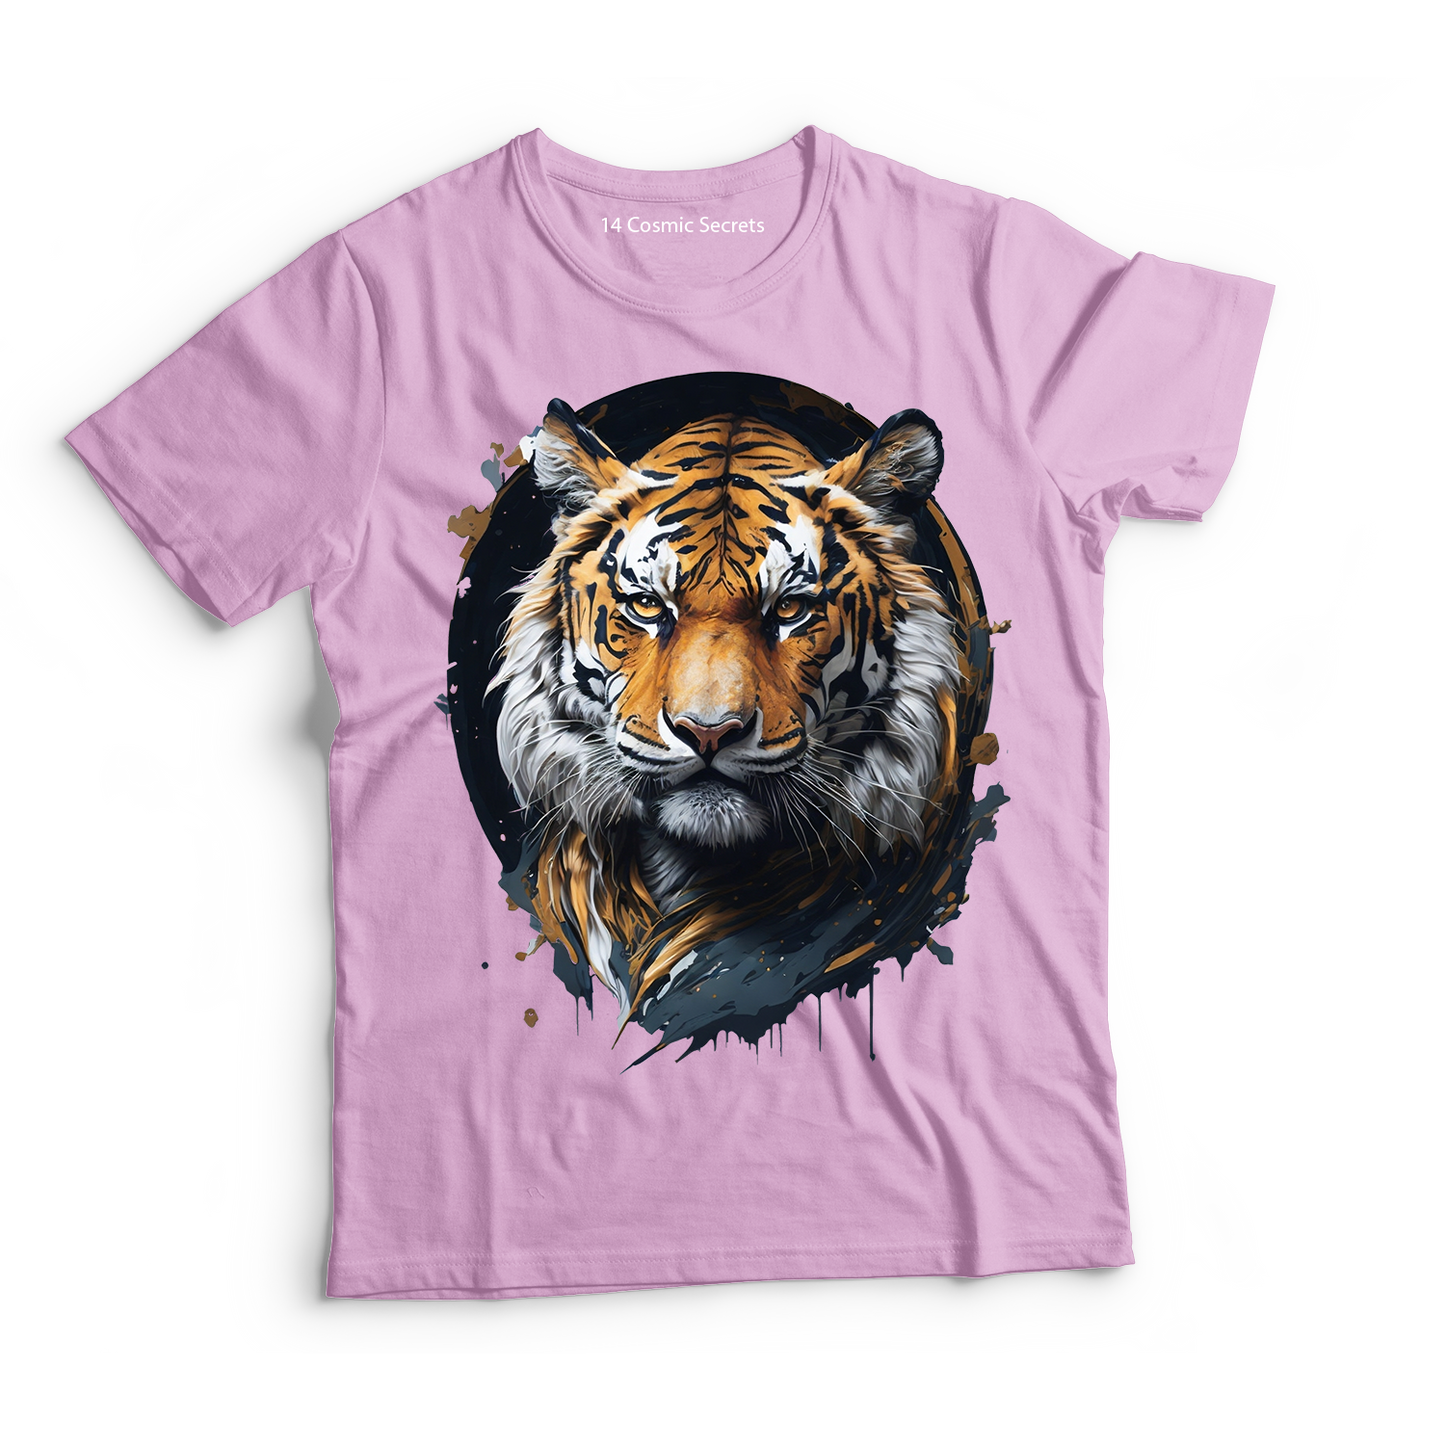 Majestic Tiger Emblem Shirt Graphic Printed T-Shirt  Cotton T-Shirt Magnificence of India T-Shirt